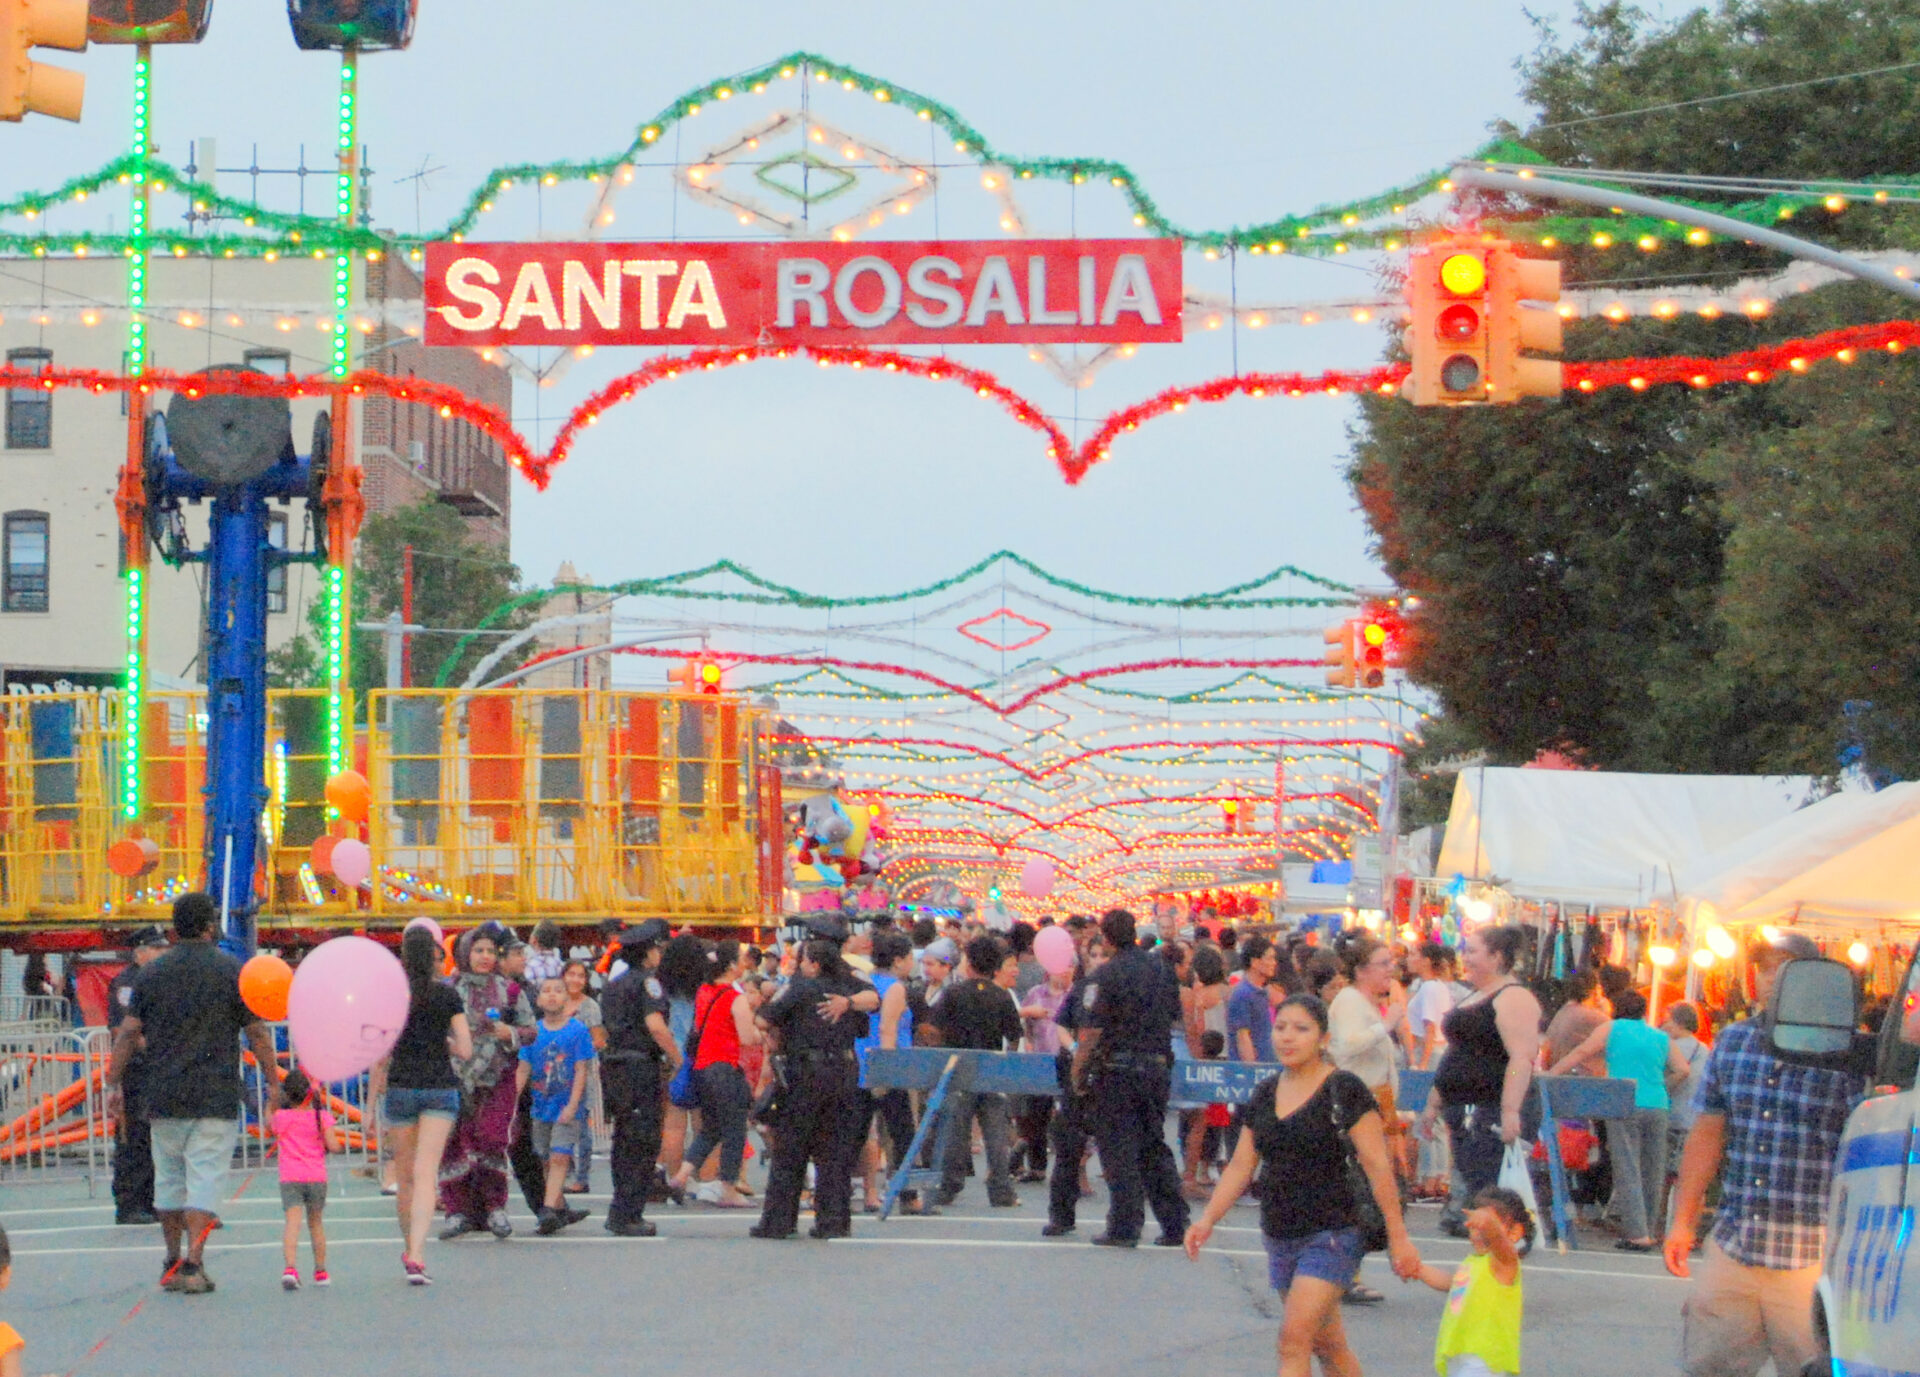 The Feast of Santa Rosalia is back!